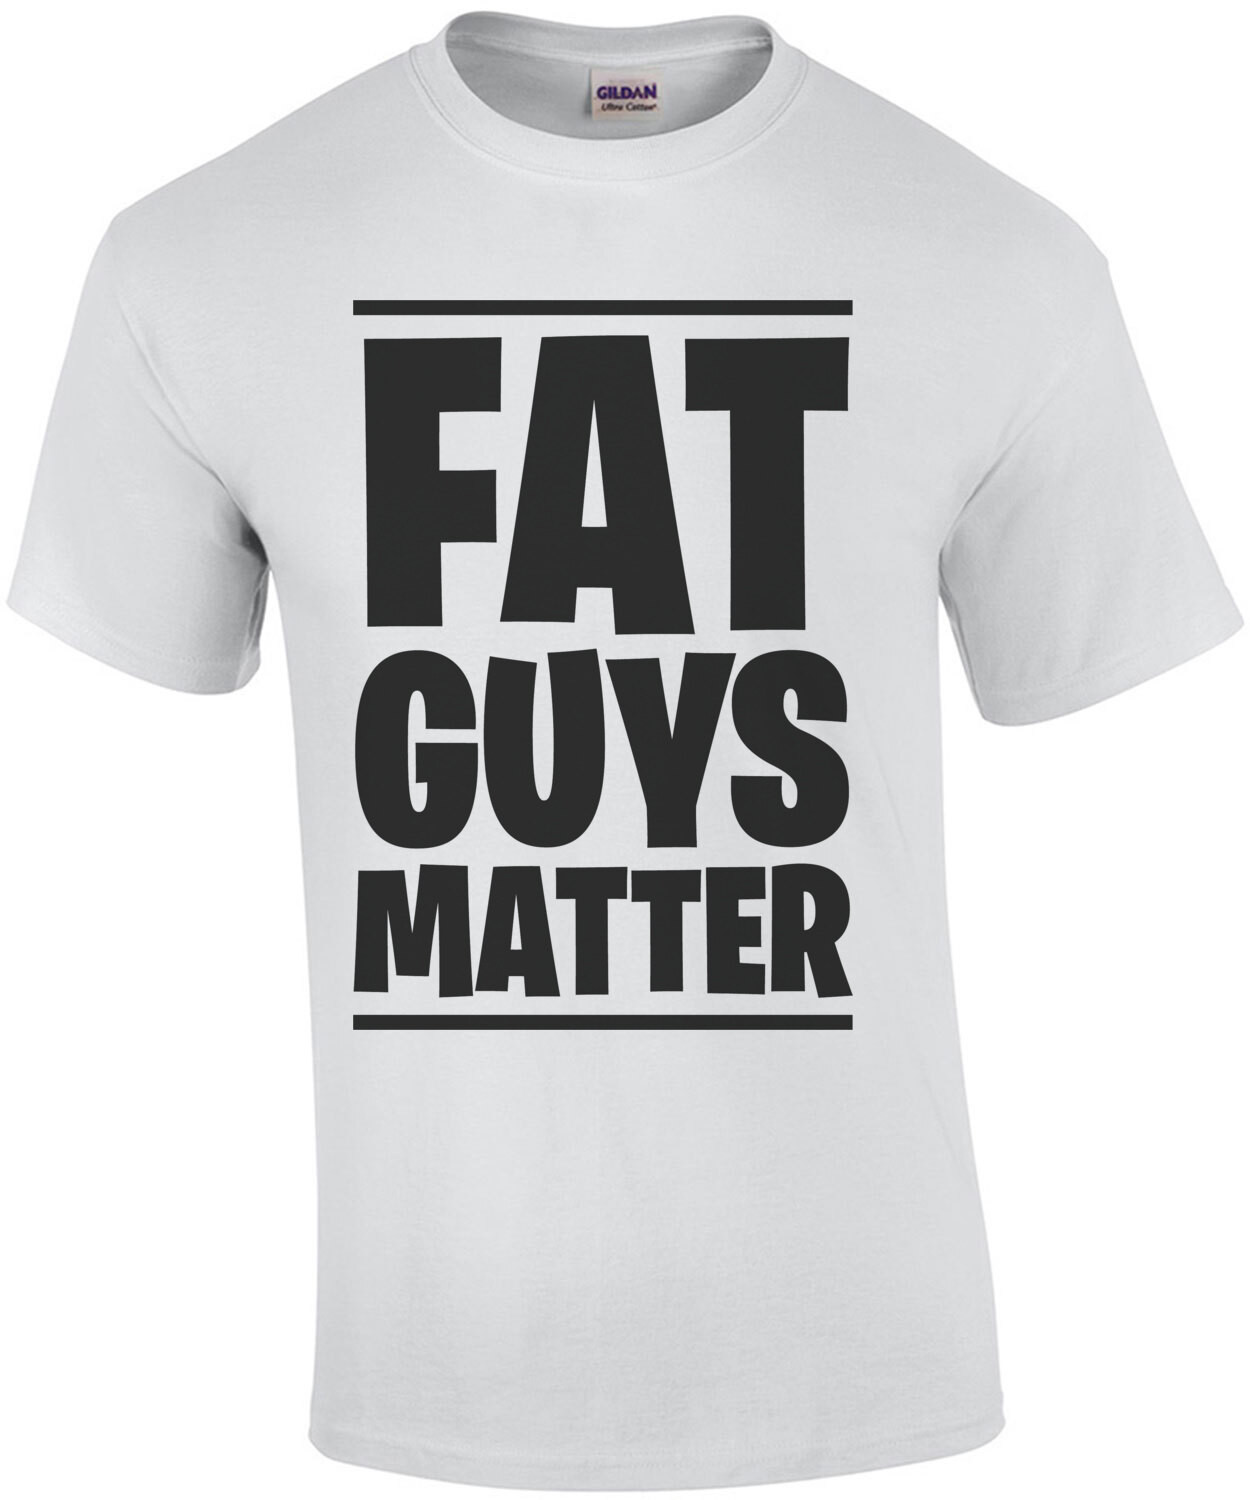 Fat Guys Matter - Fat Guy T-Shirt